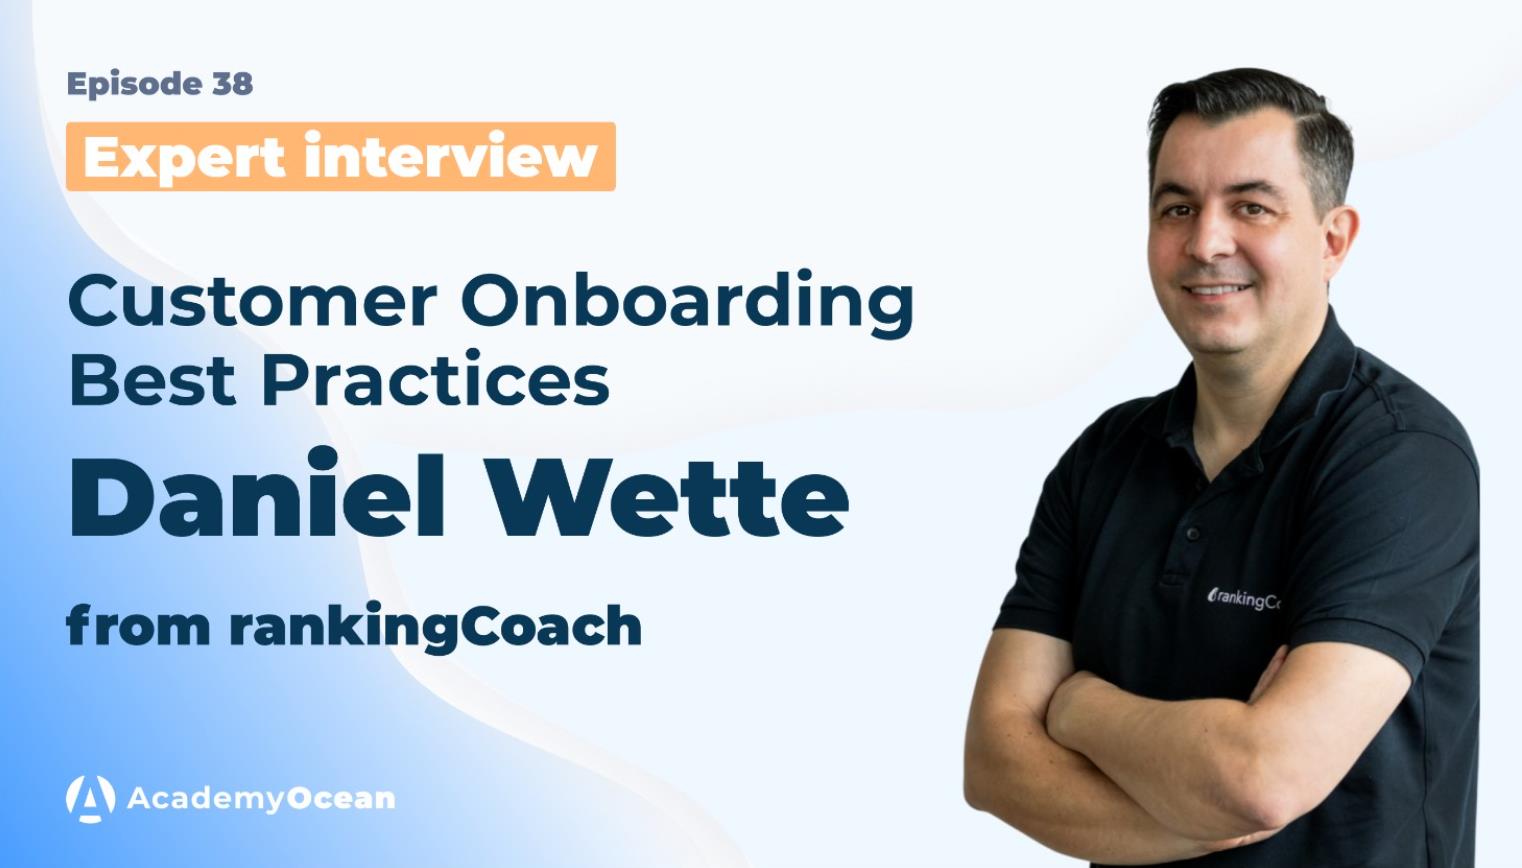 Customer Onboarding Best Practices 2021. An expert interview